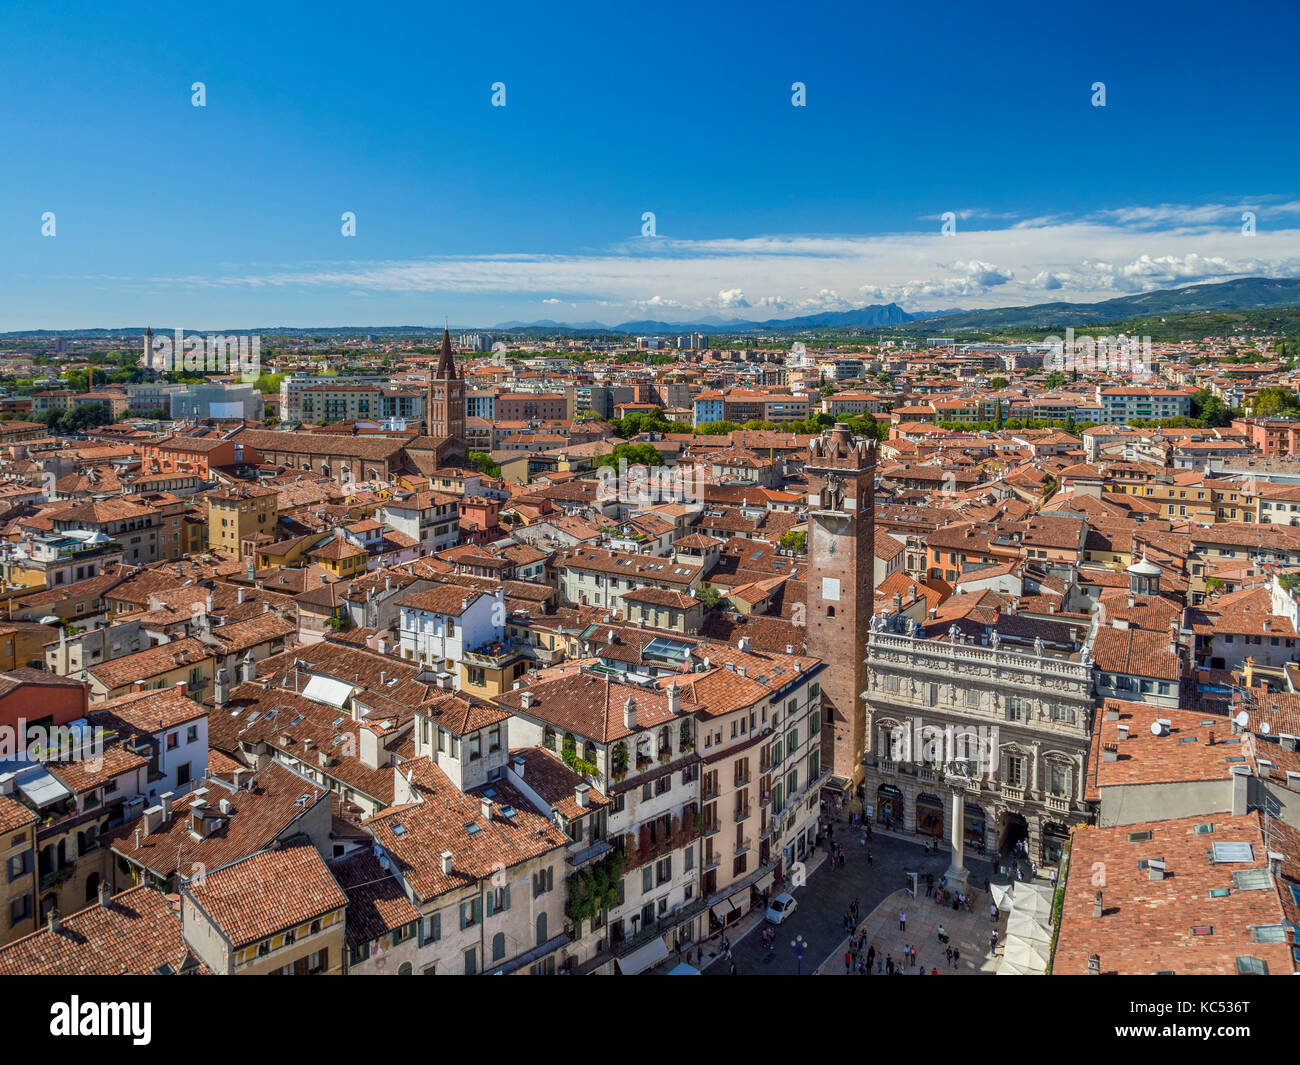 View from the Torre dei Lamberti, Lamberti Tower, to the Piazza delle Erbe, Verona, Veneto, Italy, Europe Stock Photo